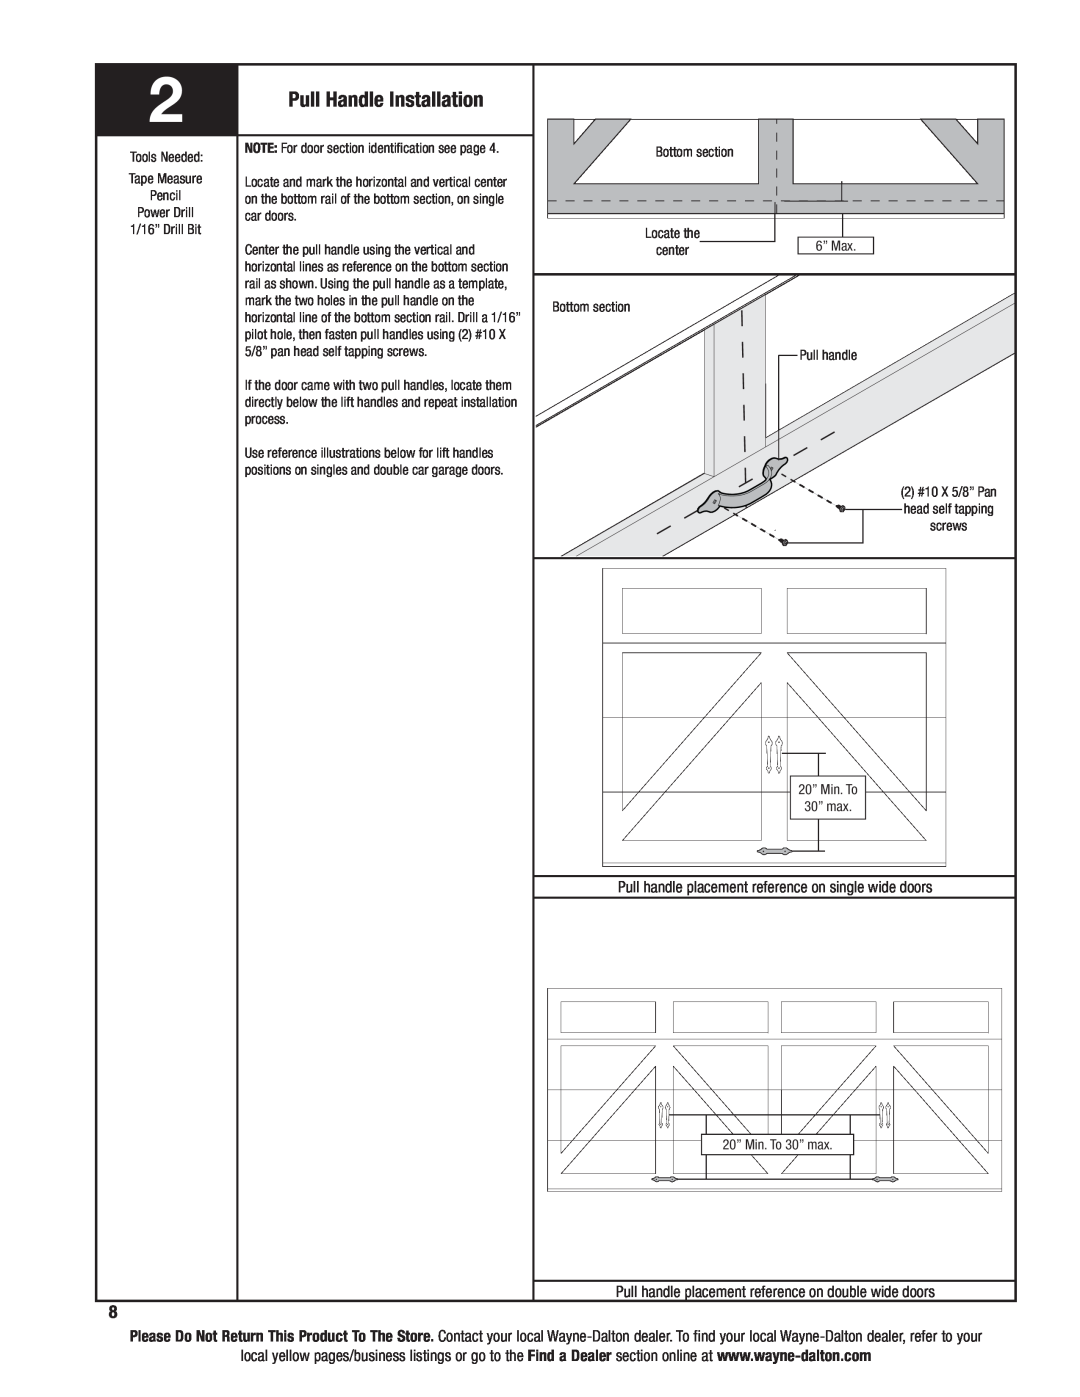 Wayne-Dalton 6100 installation instructions Pull Handle Installation, Pull handle placement reference on single wide doors 